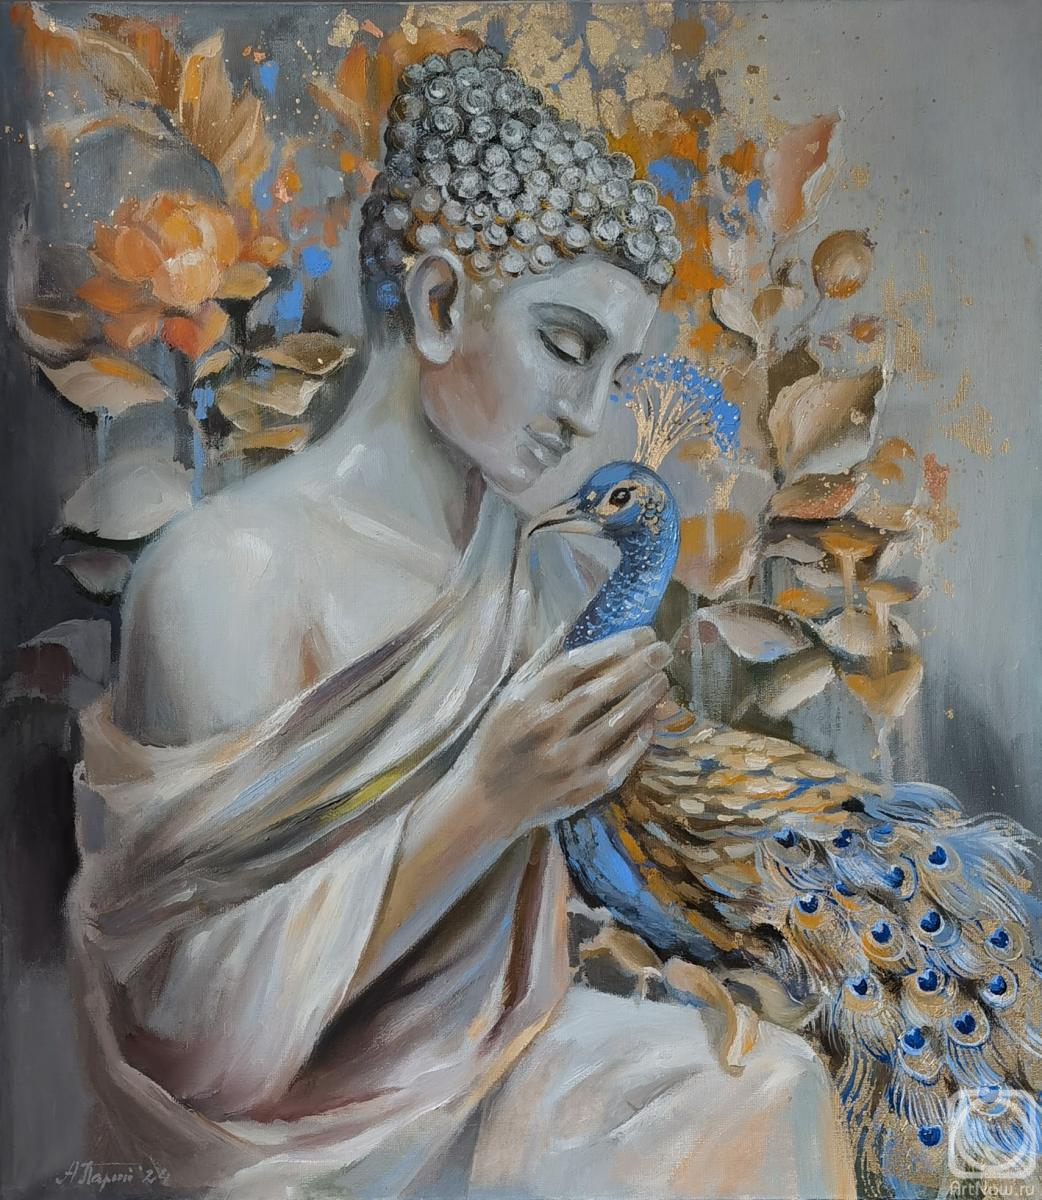 Pariy Anna. Buddha with a peacock